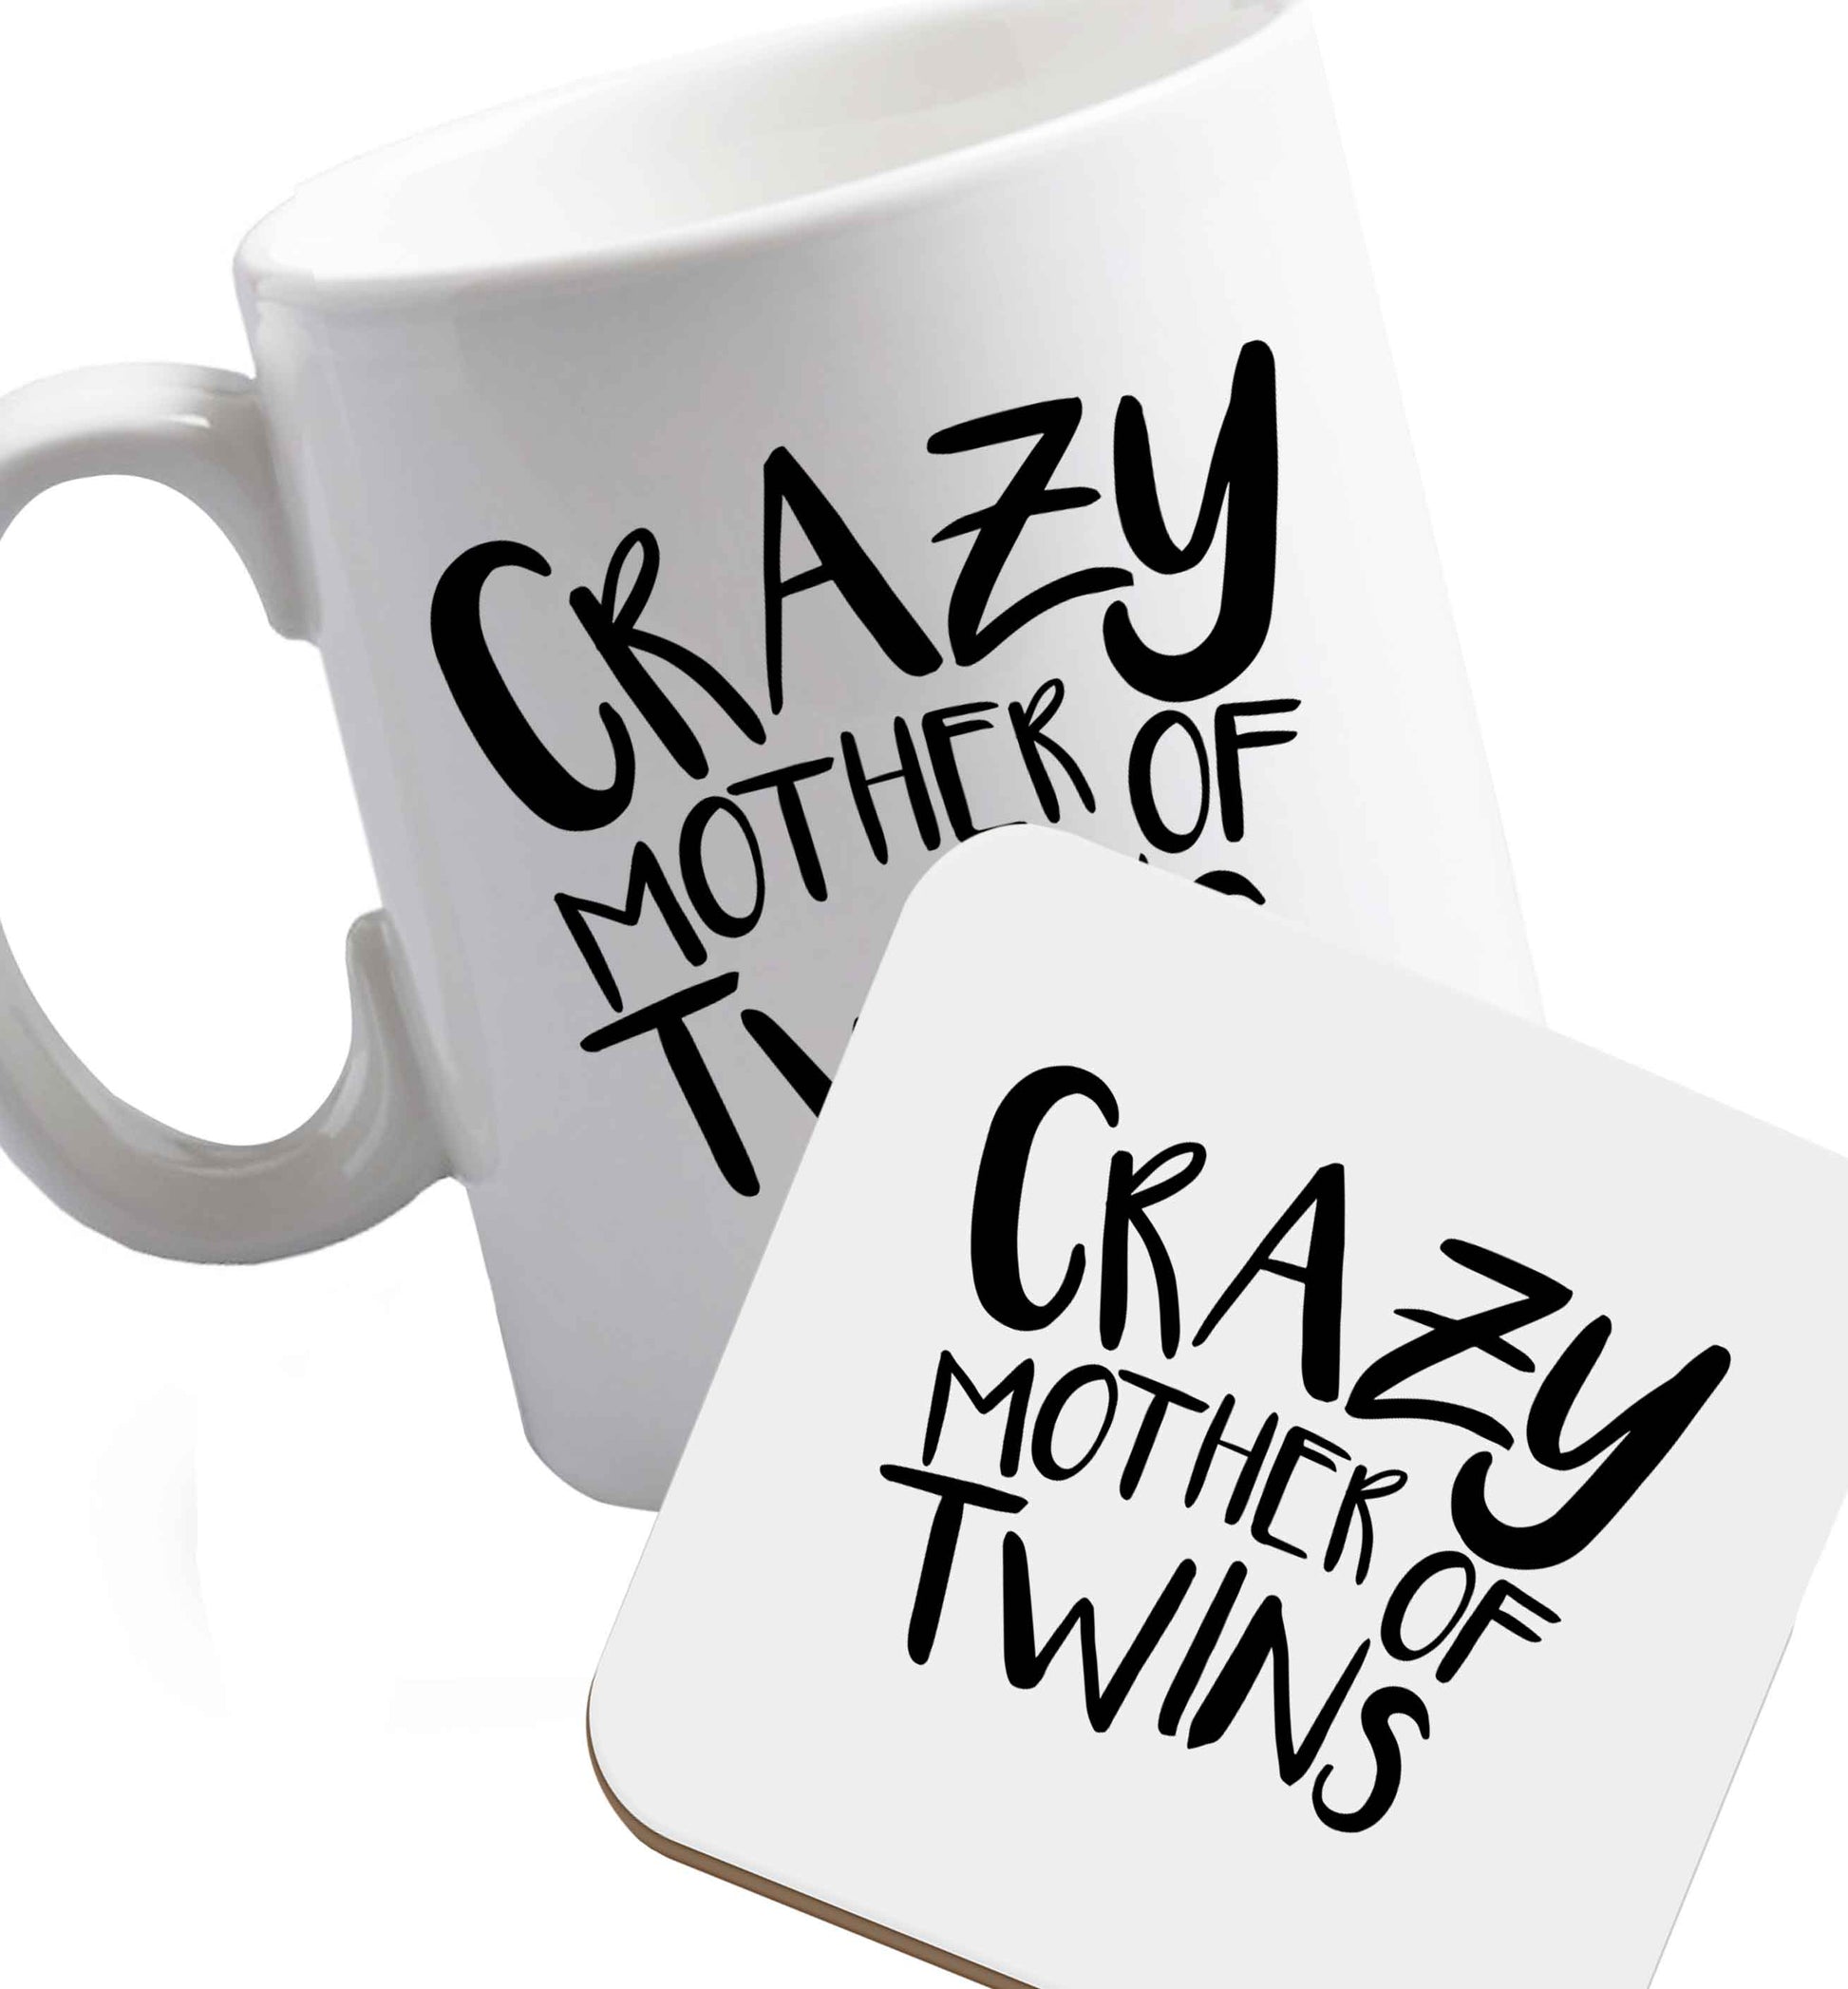 10 oz Crazy mother of twins ceramic mug and coaster set right handed